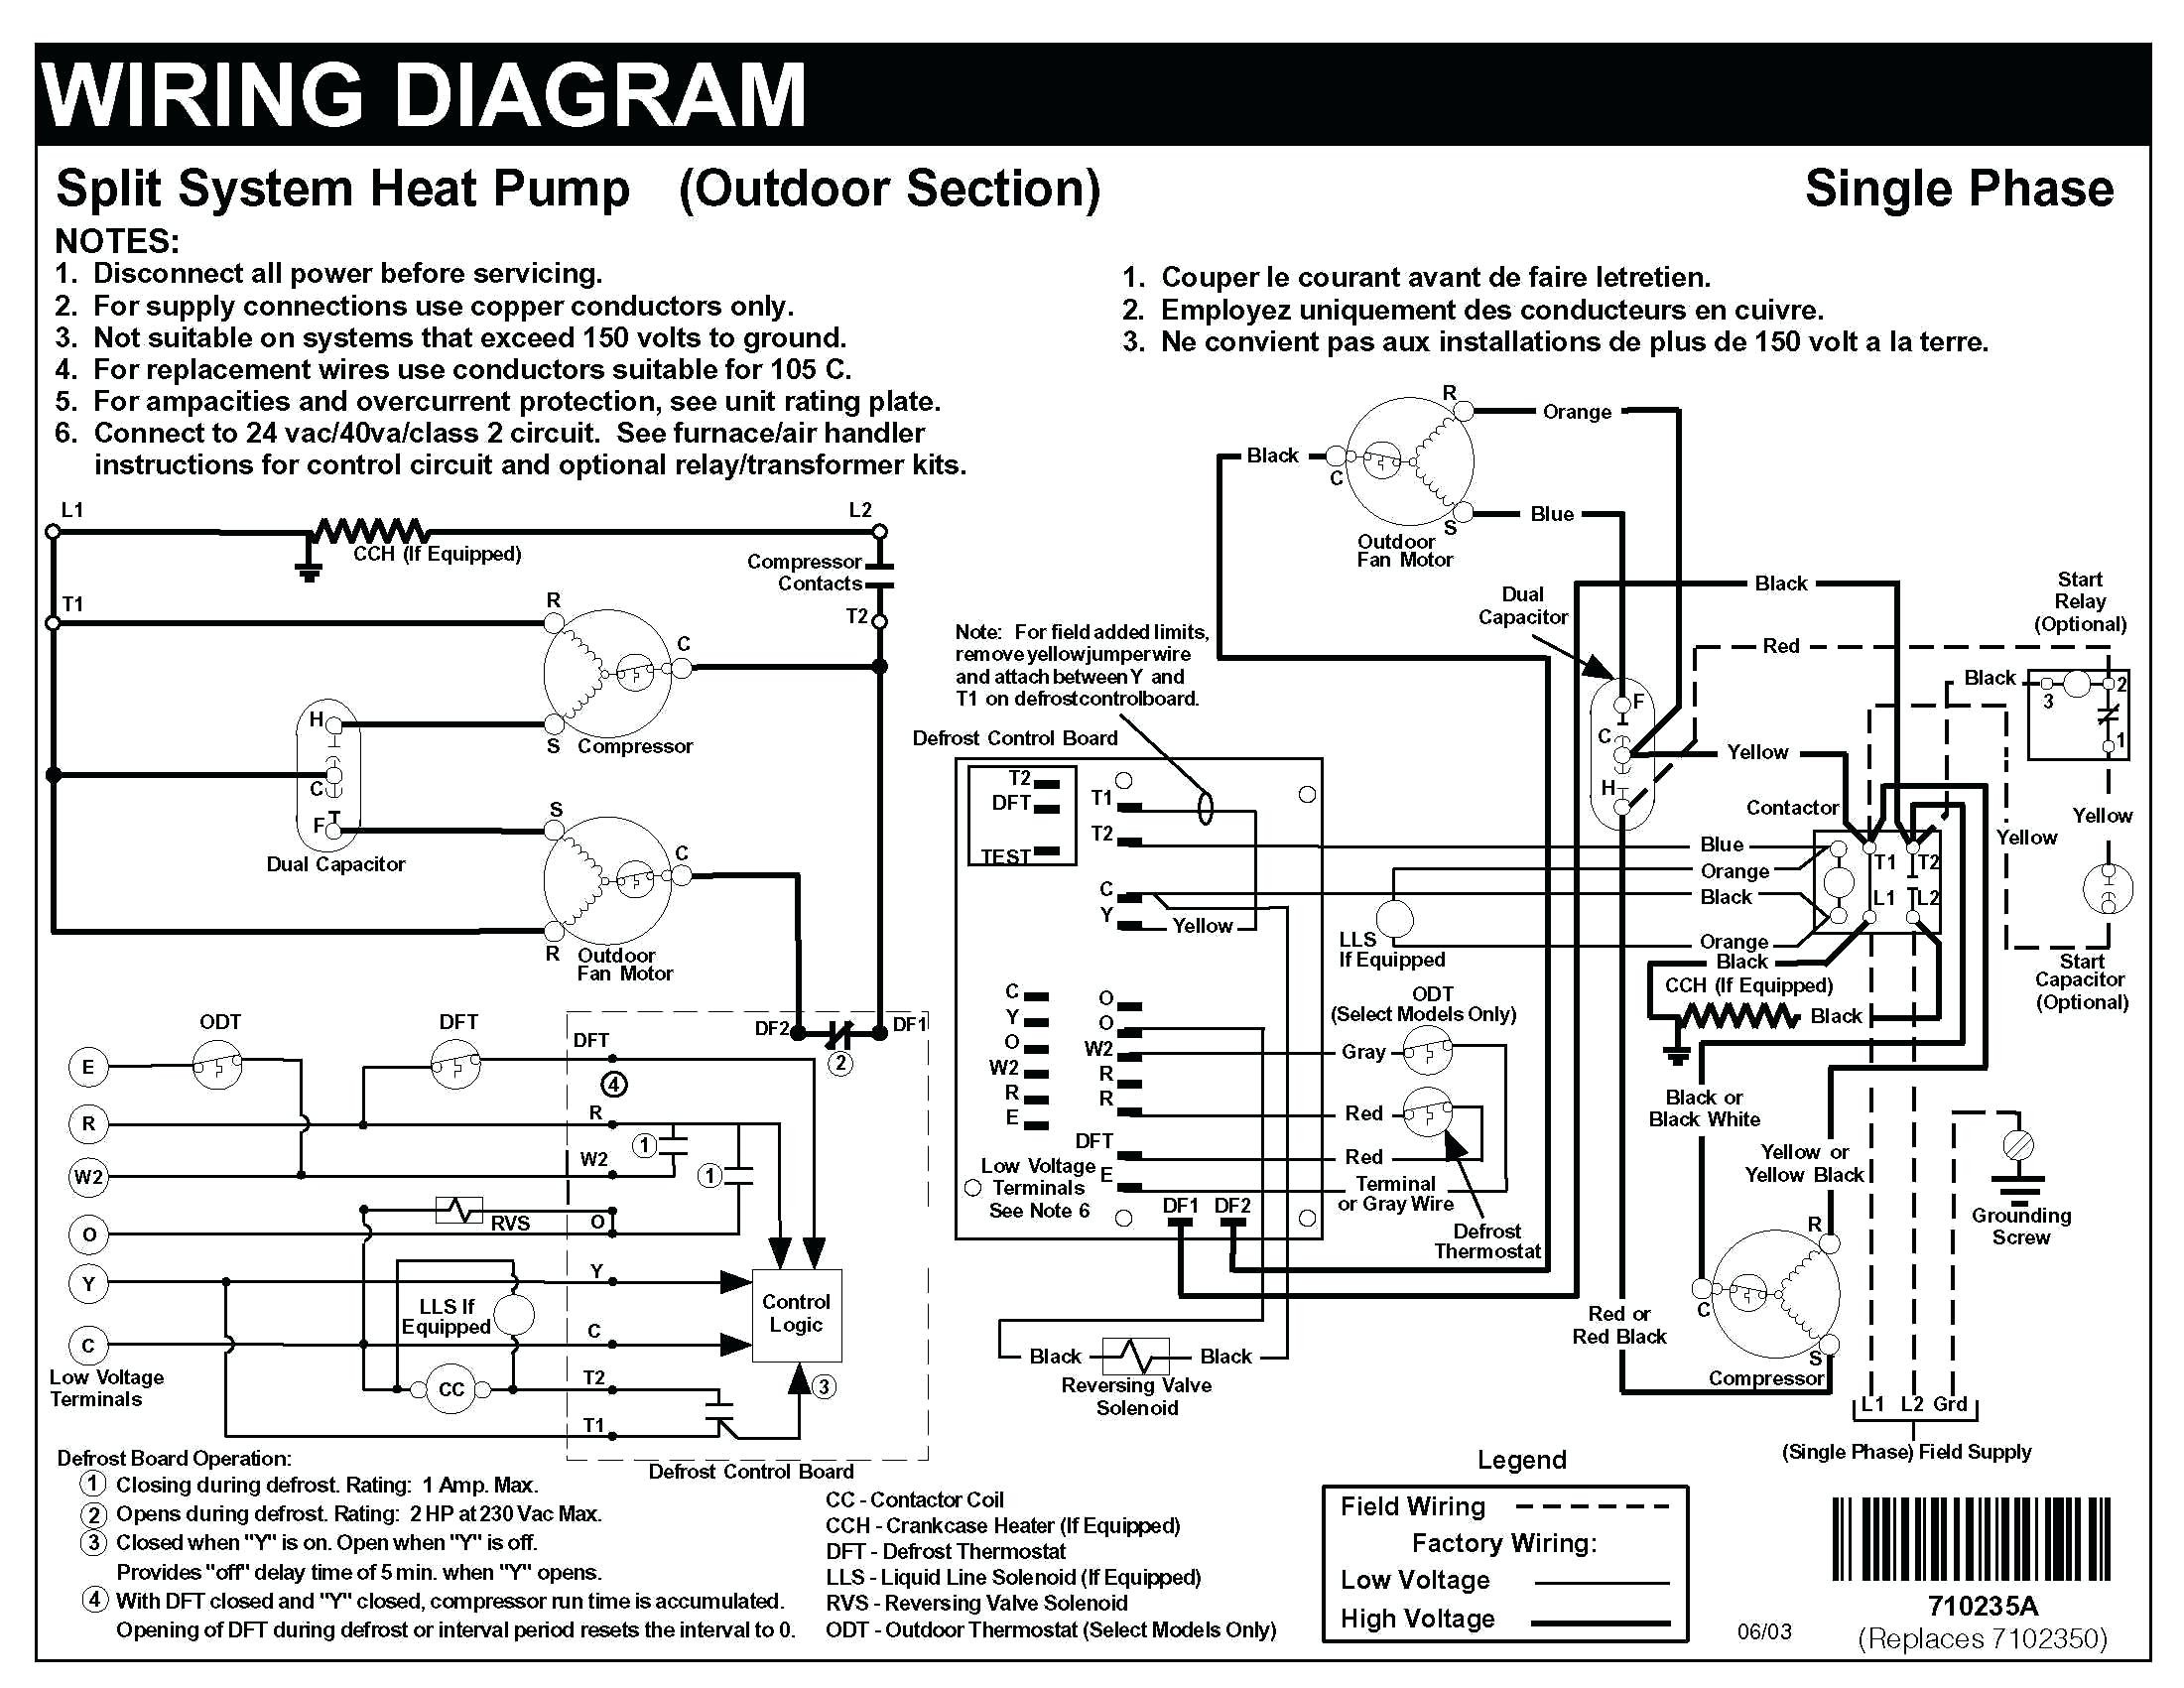 American Standard Furnace Wiring Diagram American Standard Furnace Wiring Diagram Diagrams Heat Pump Ac Unit Of American Standard Furnace Wiring Diagram